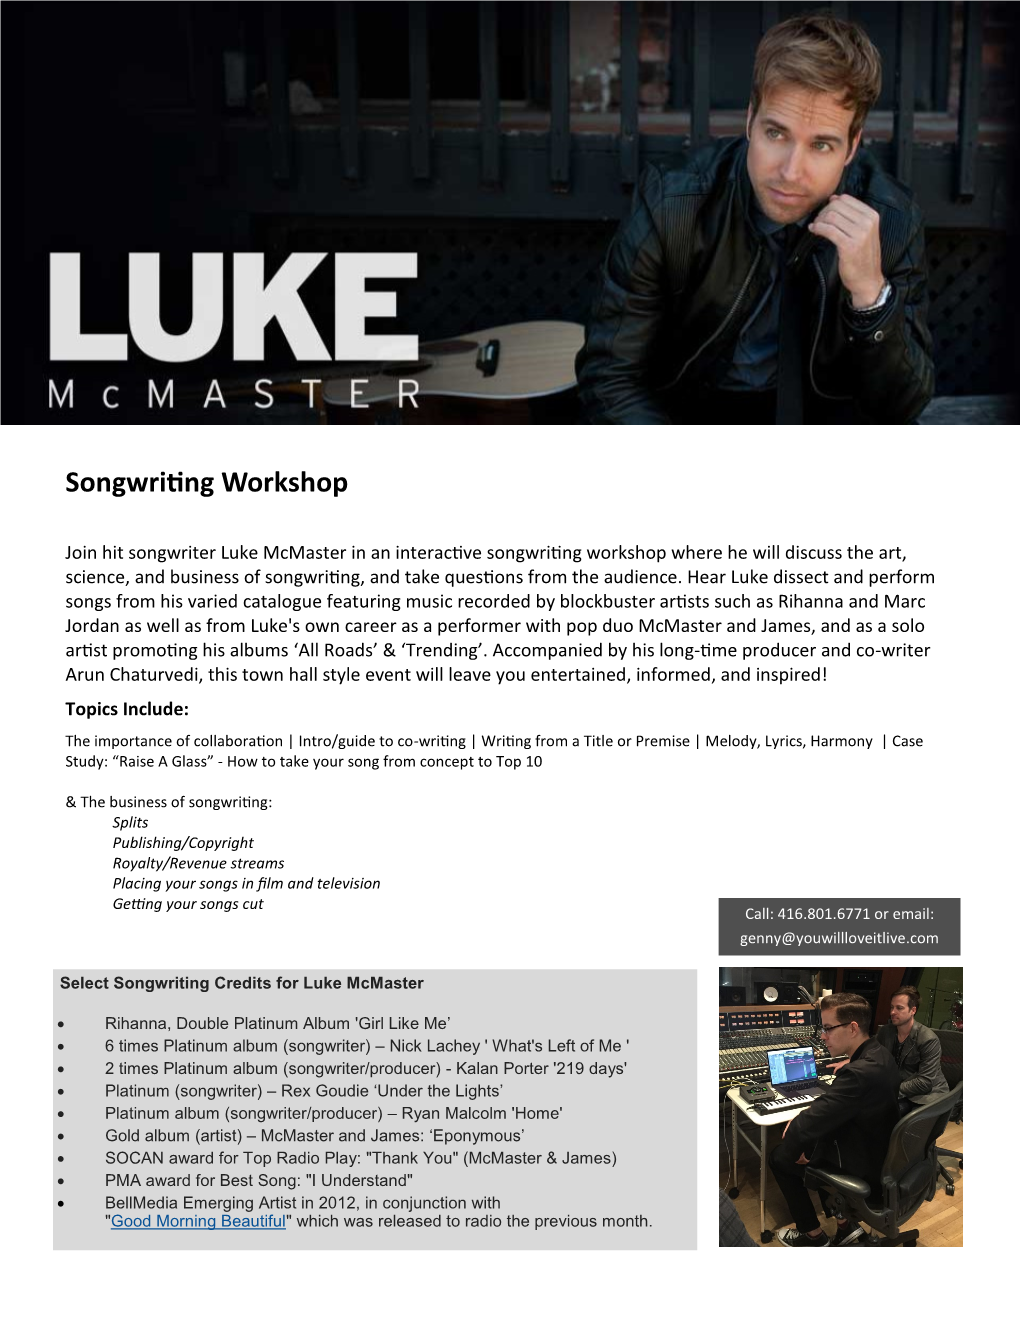 Songwriting Workshop Description